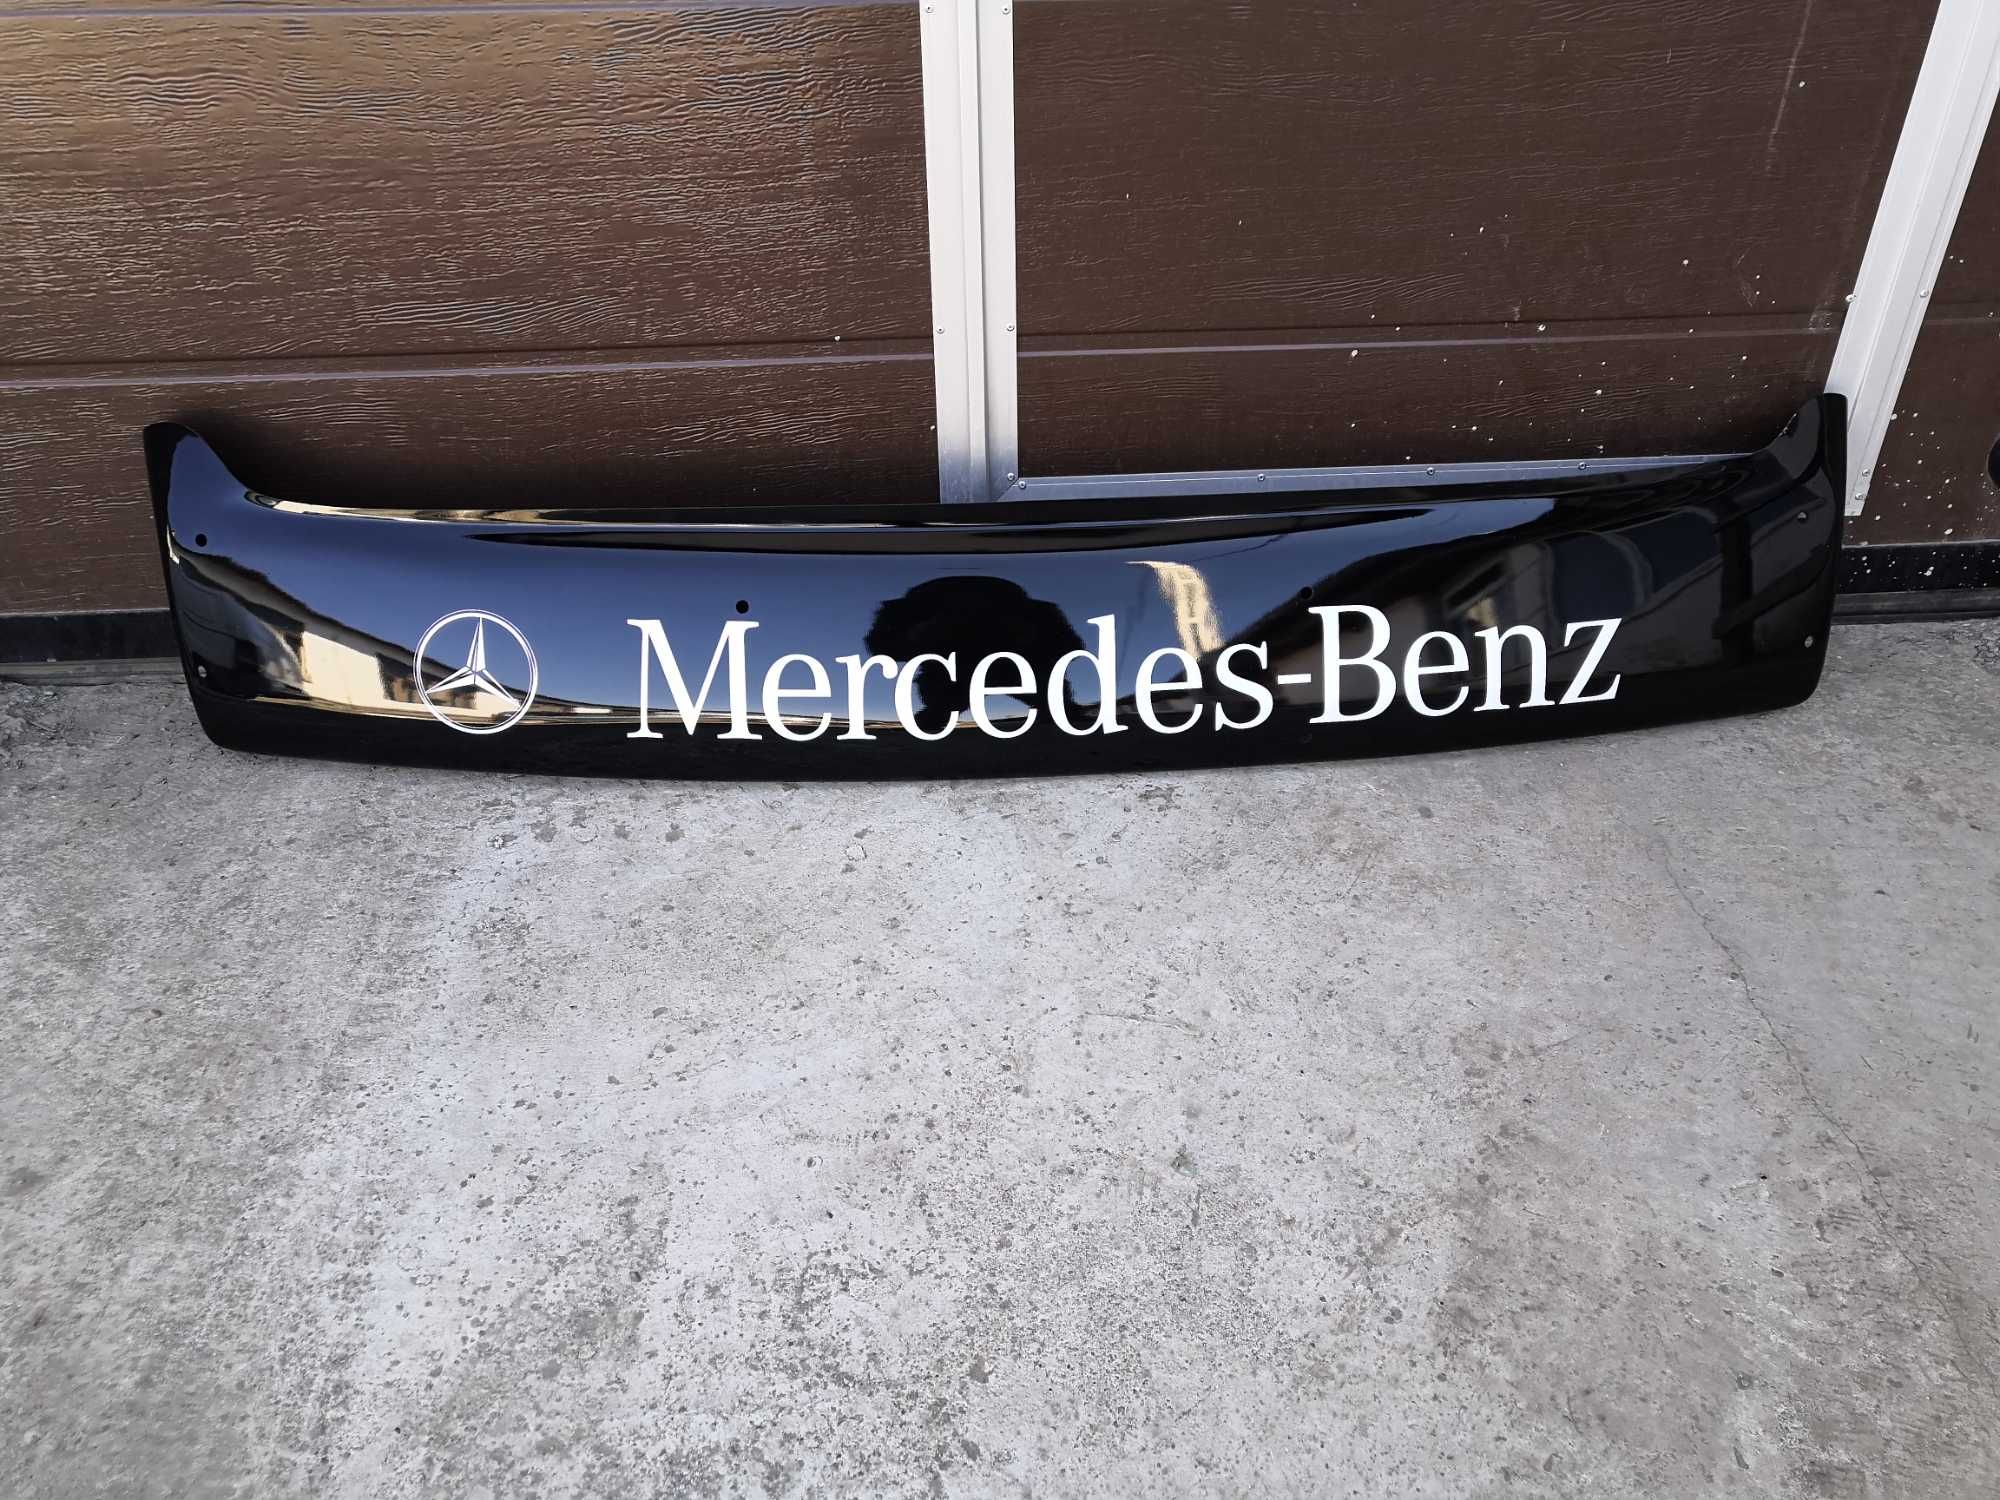 Parasolar Mercedes Sprinter NOU Inscriptionat
550 lei